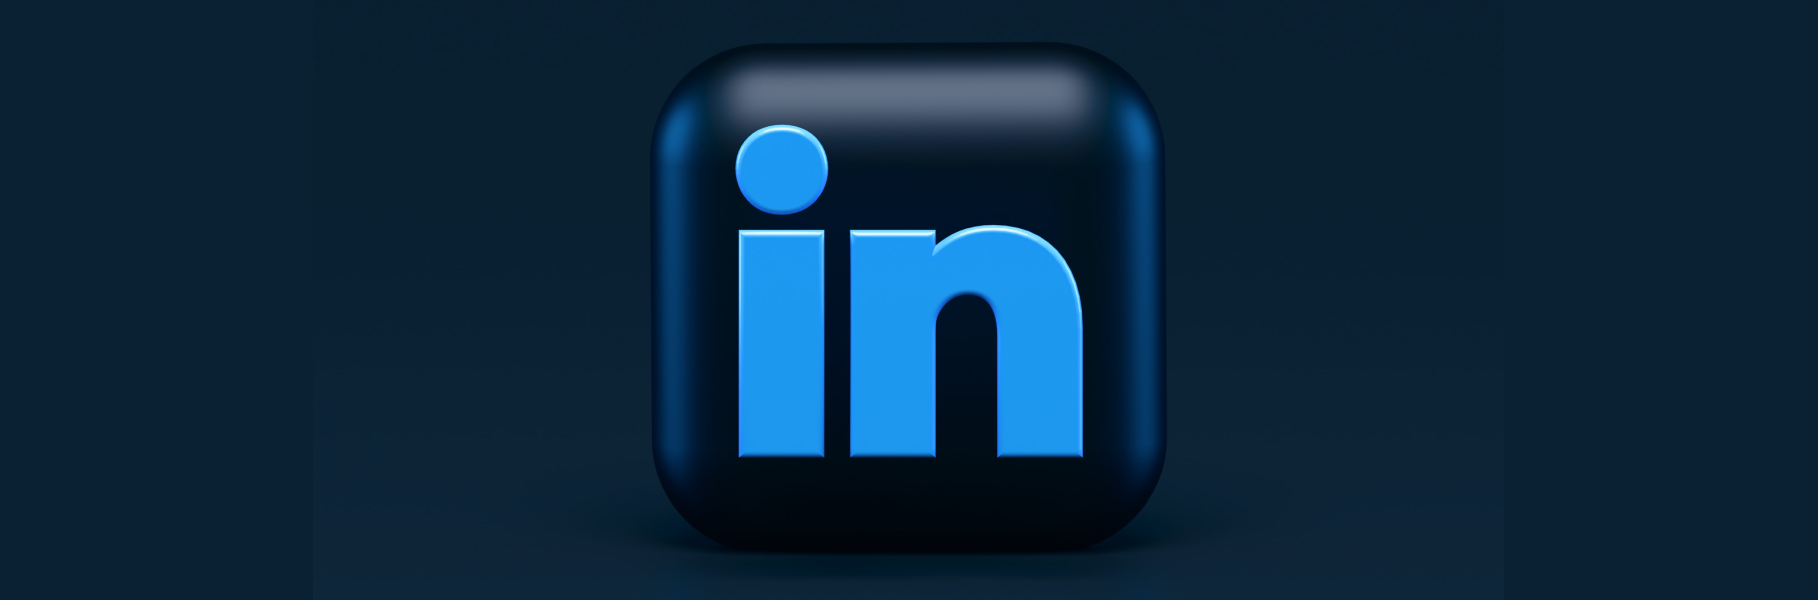 LinkedIn Industries List: Rankings And Statistics